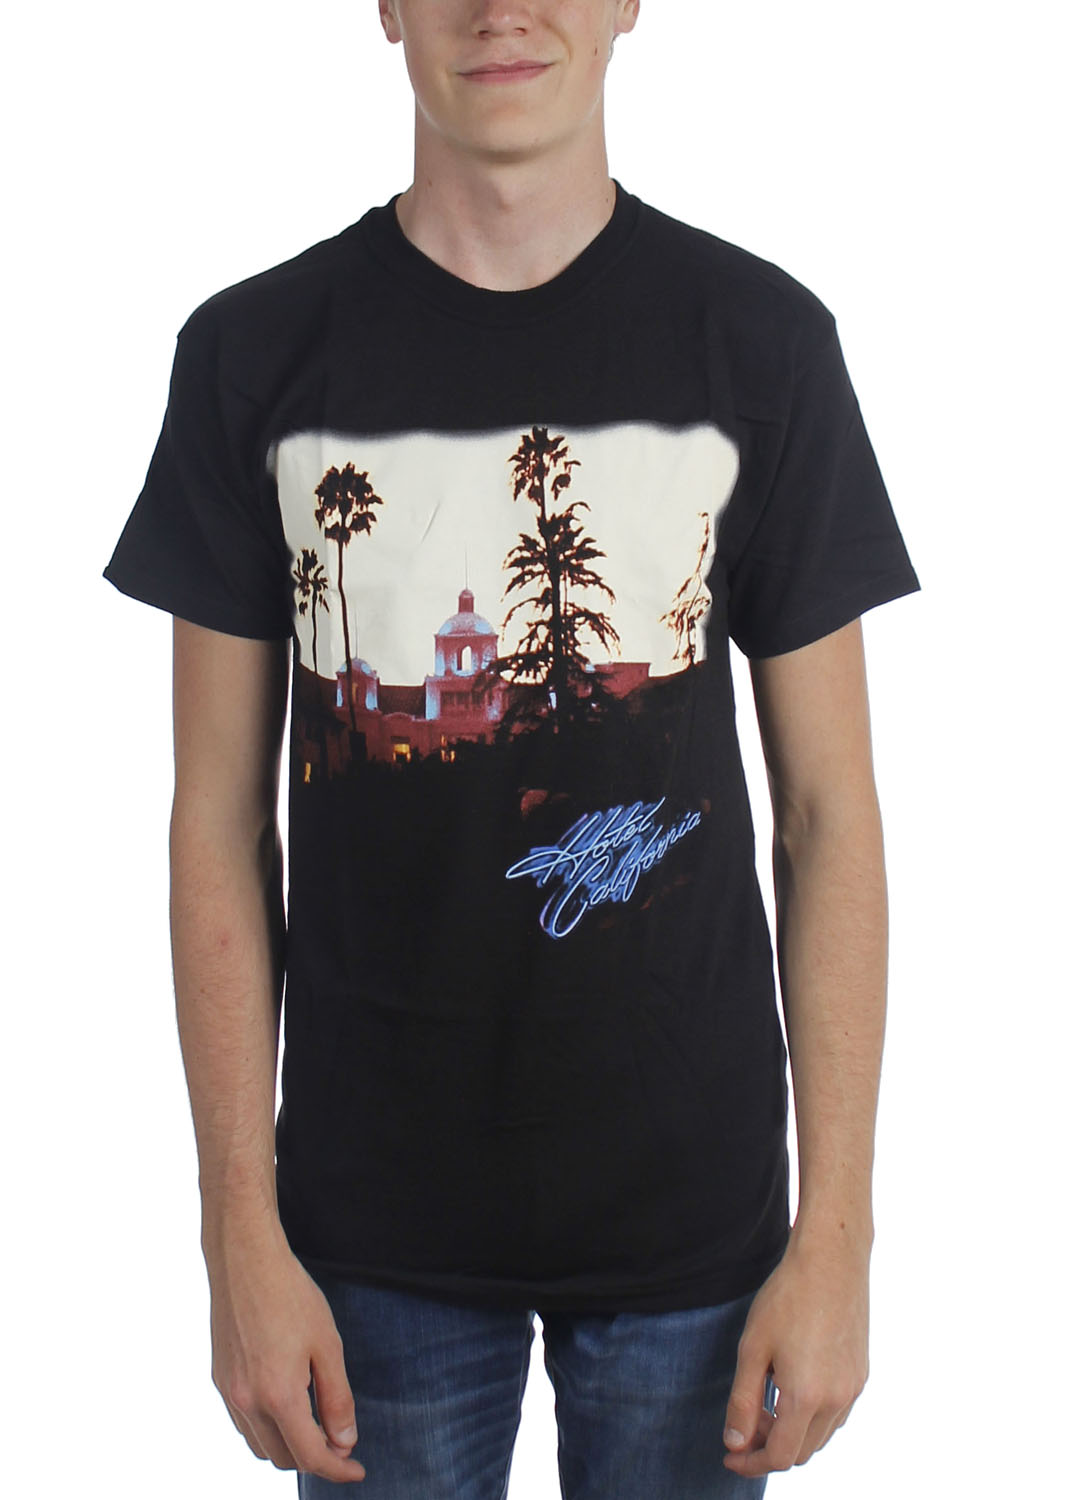 The Eagles - Hotel California T-Shirt